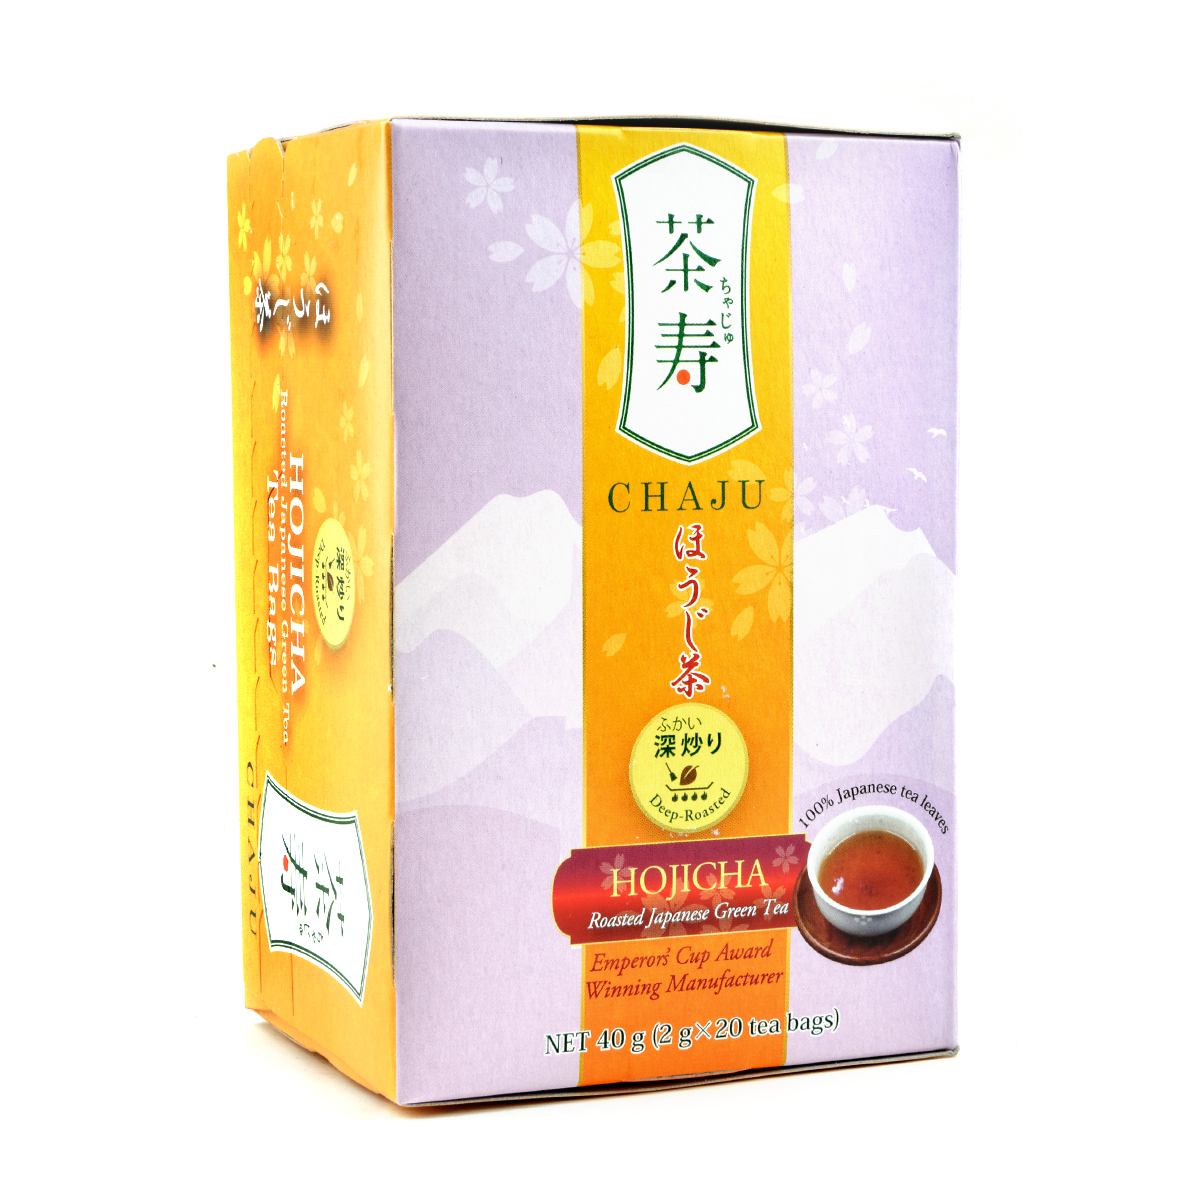 Ceai, cafea, bauturi fara alcool - Ceai verde japonez Hojicha CHAJU (20x2g) 40g, asianfood.ro